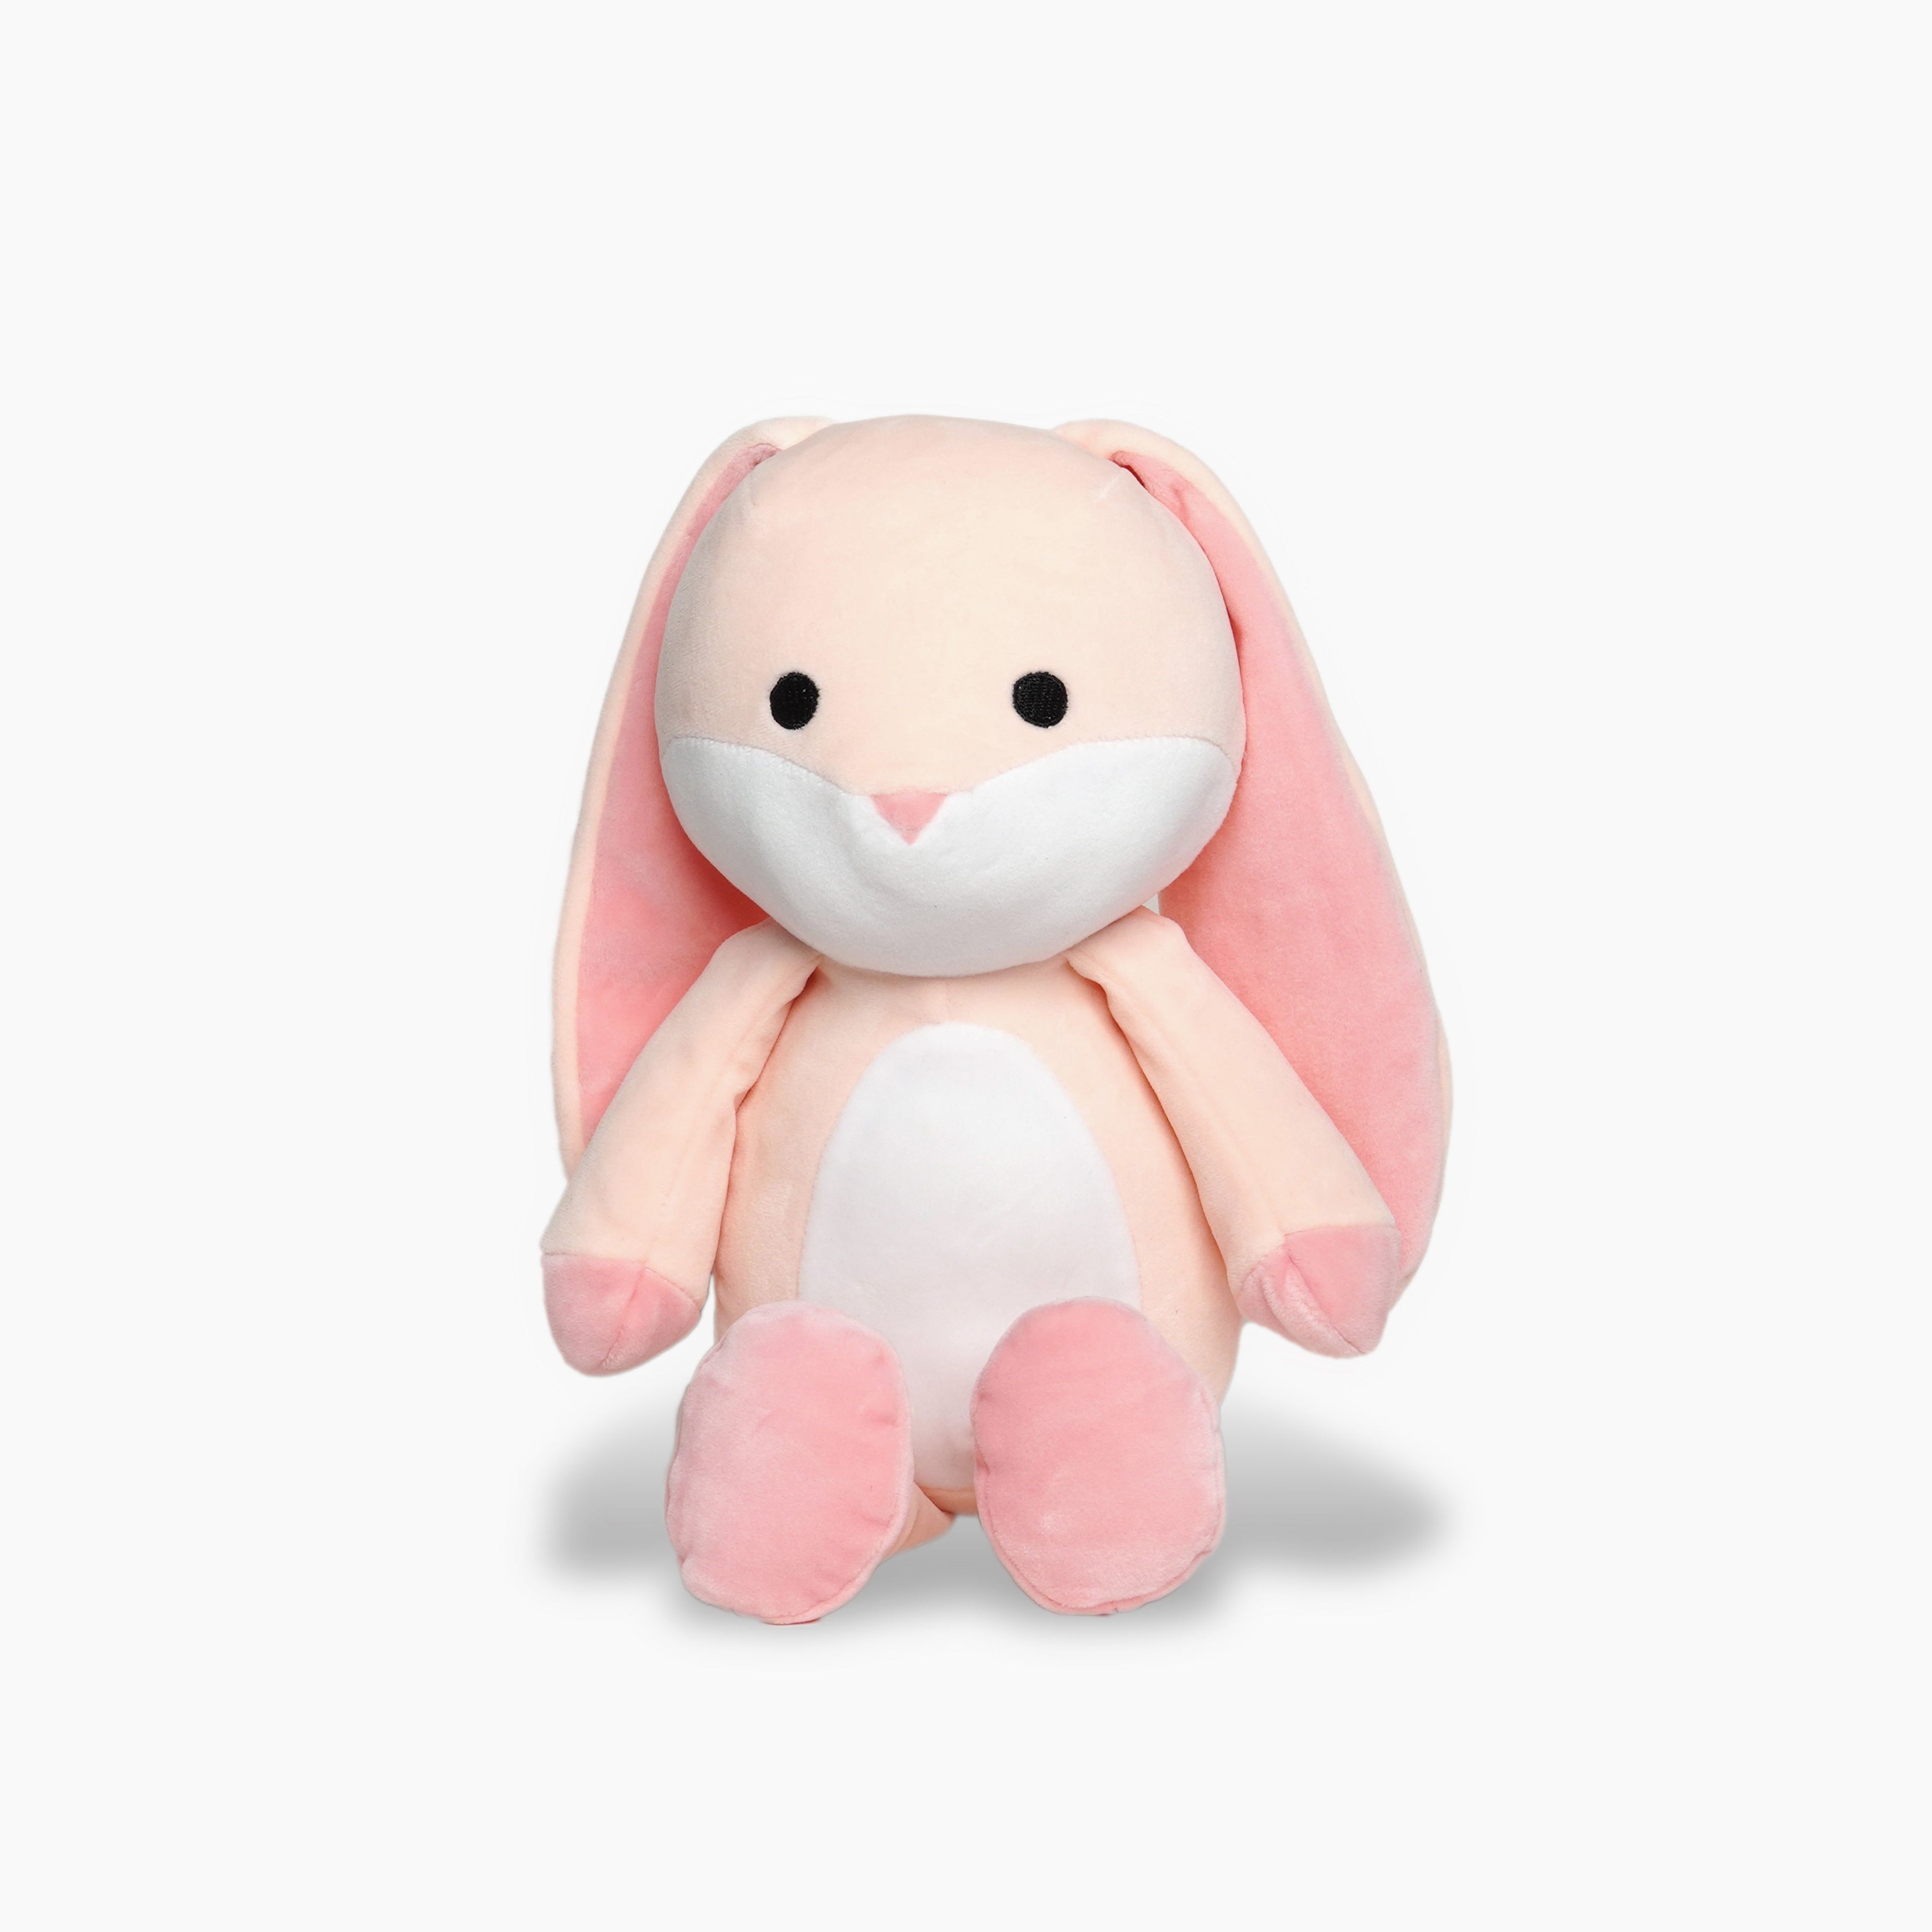 Avocatt Huggable Pink Rabbit Plush Stuffed Animal